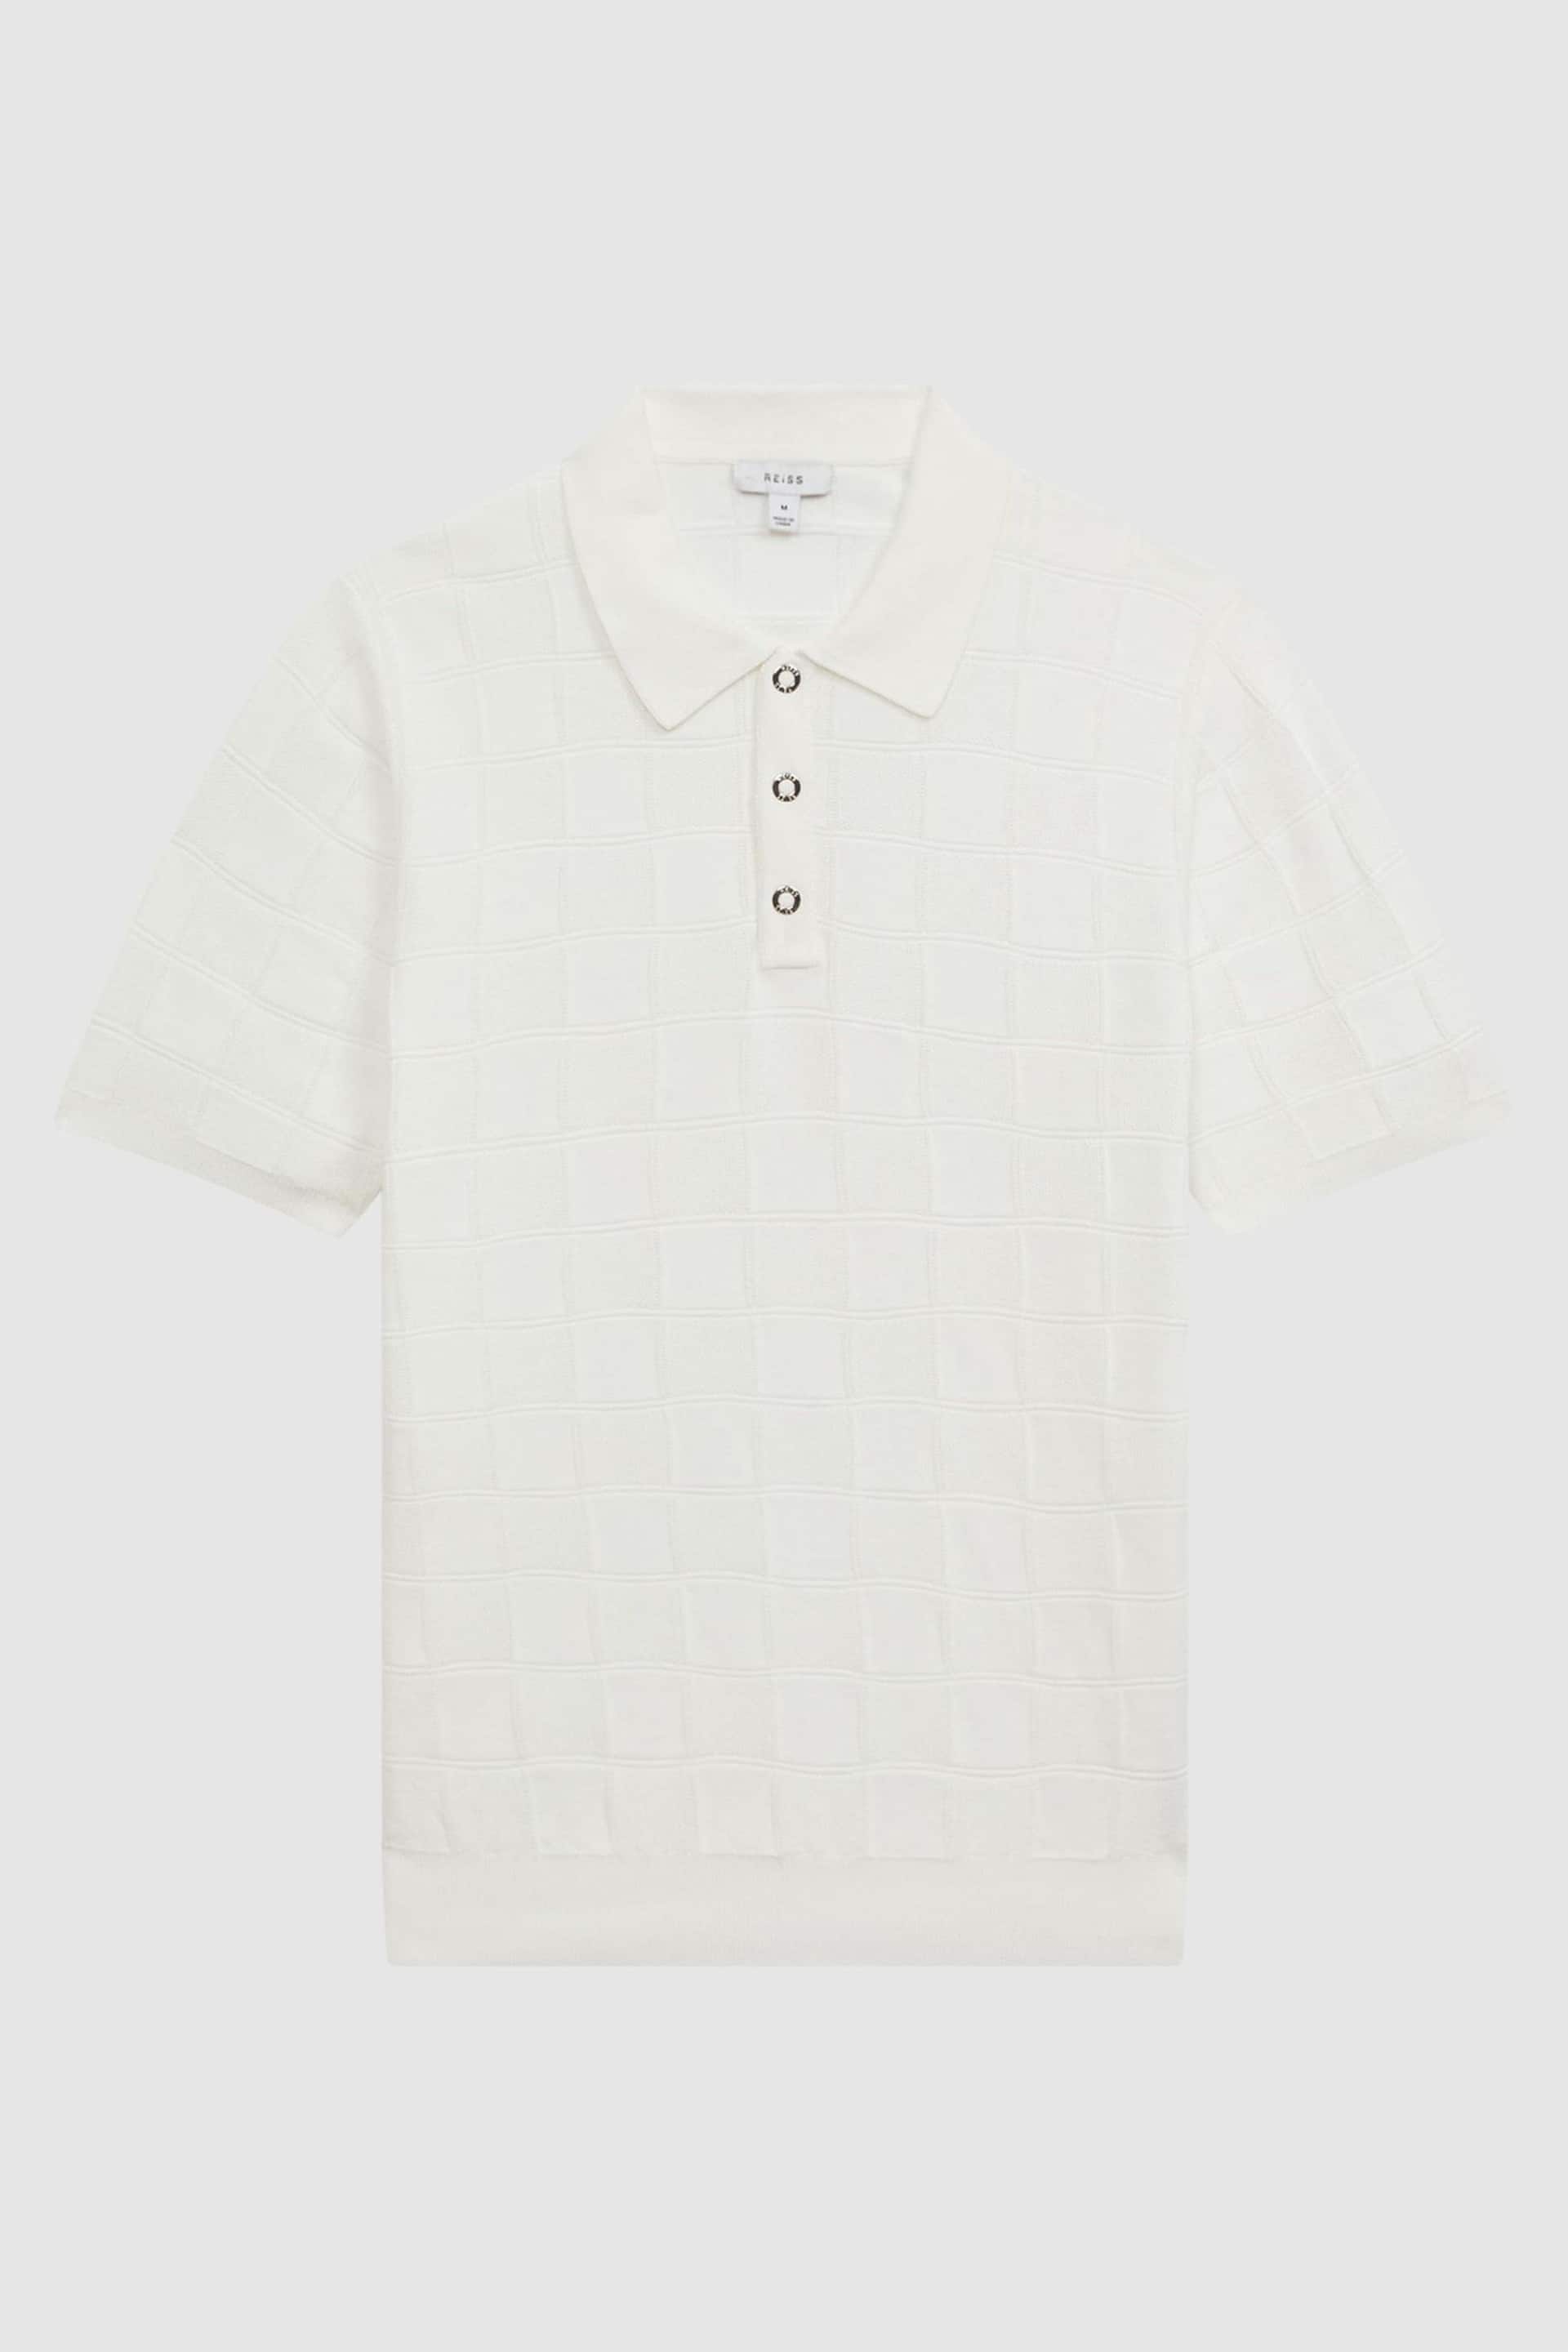 Reiss White Blaze Cotton Press-Stud Polo T-Shirt - Image 2 of 4